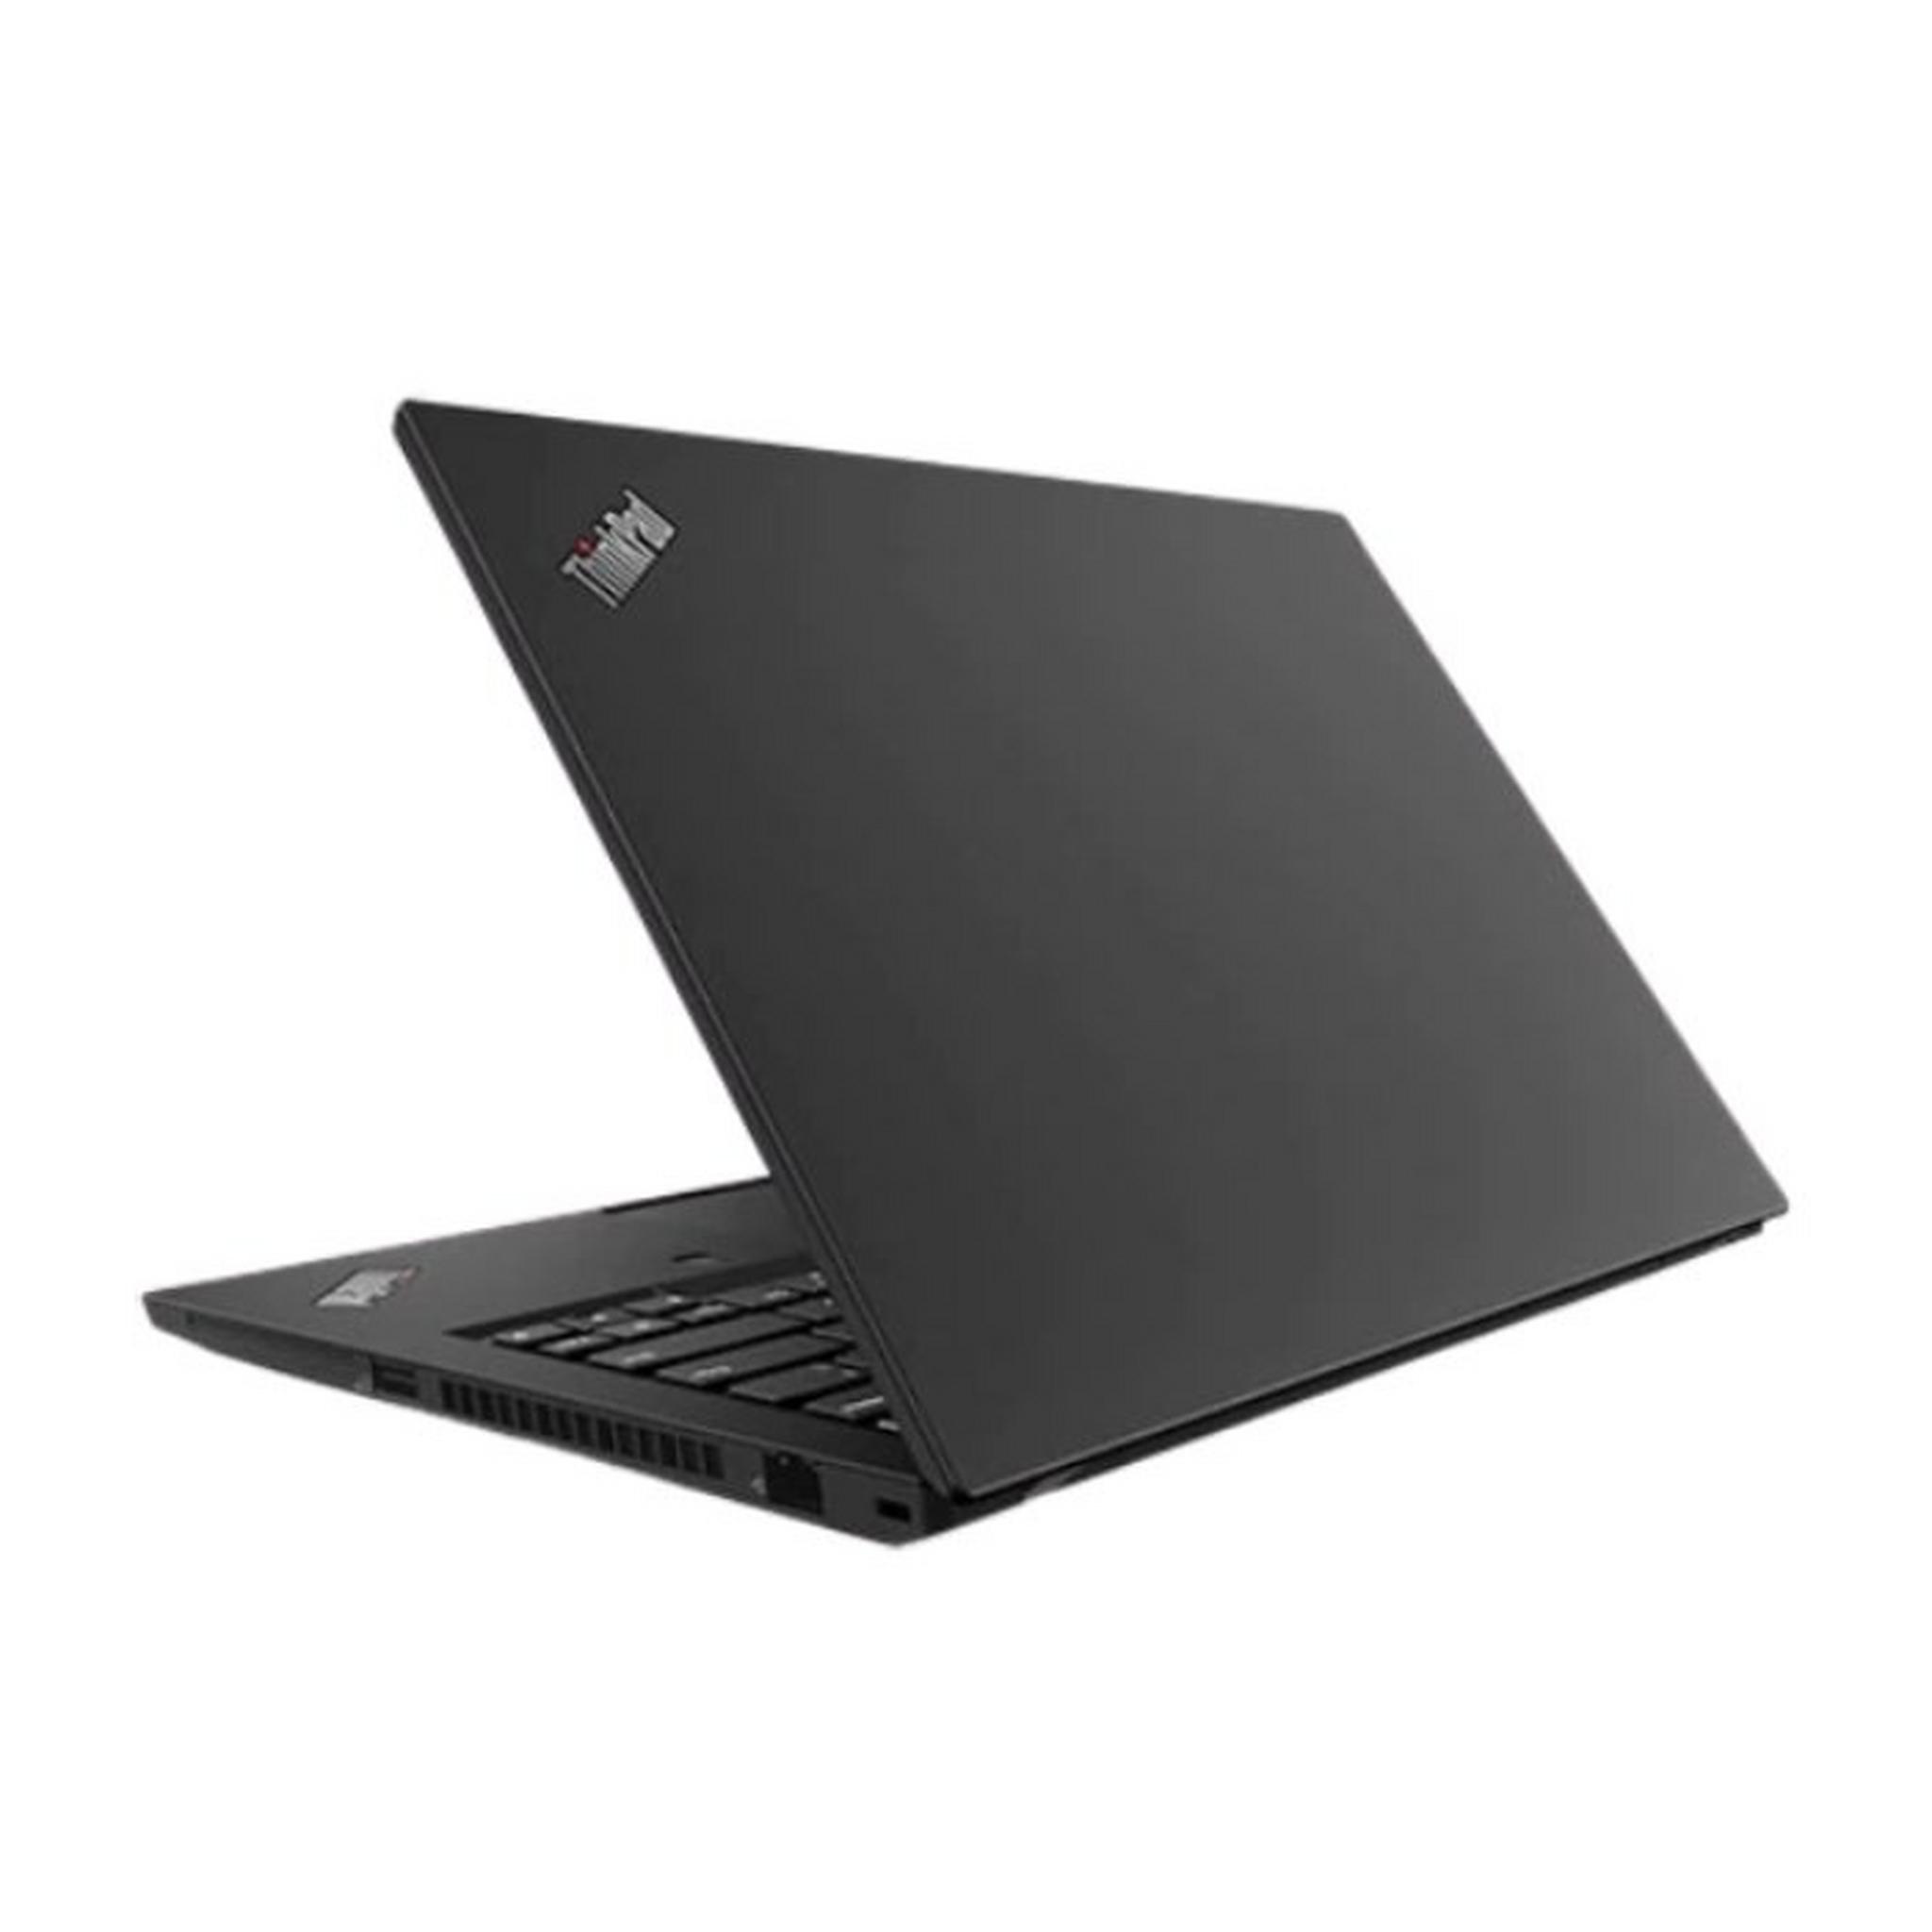 Lenovo ThinkPad T490, Core i5, 8GB RAM, 512GB SSD, 14 inch Laptop - Black (20N2000CAD)